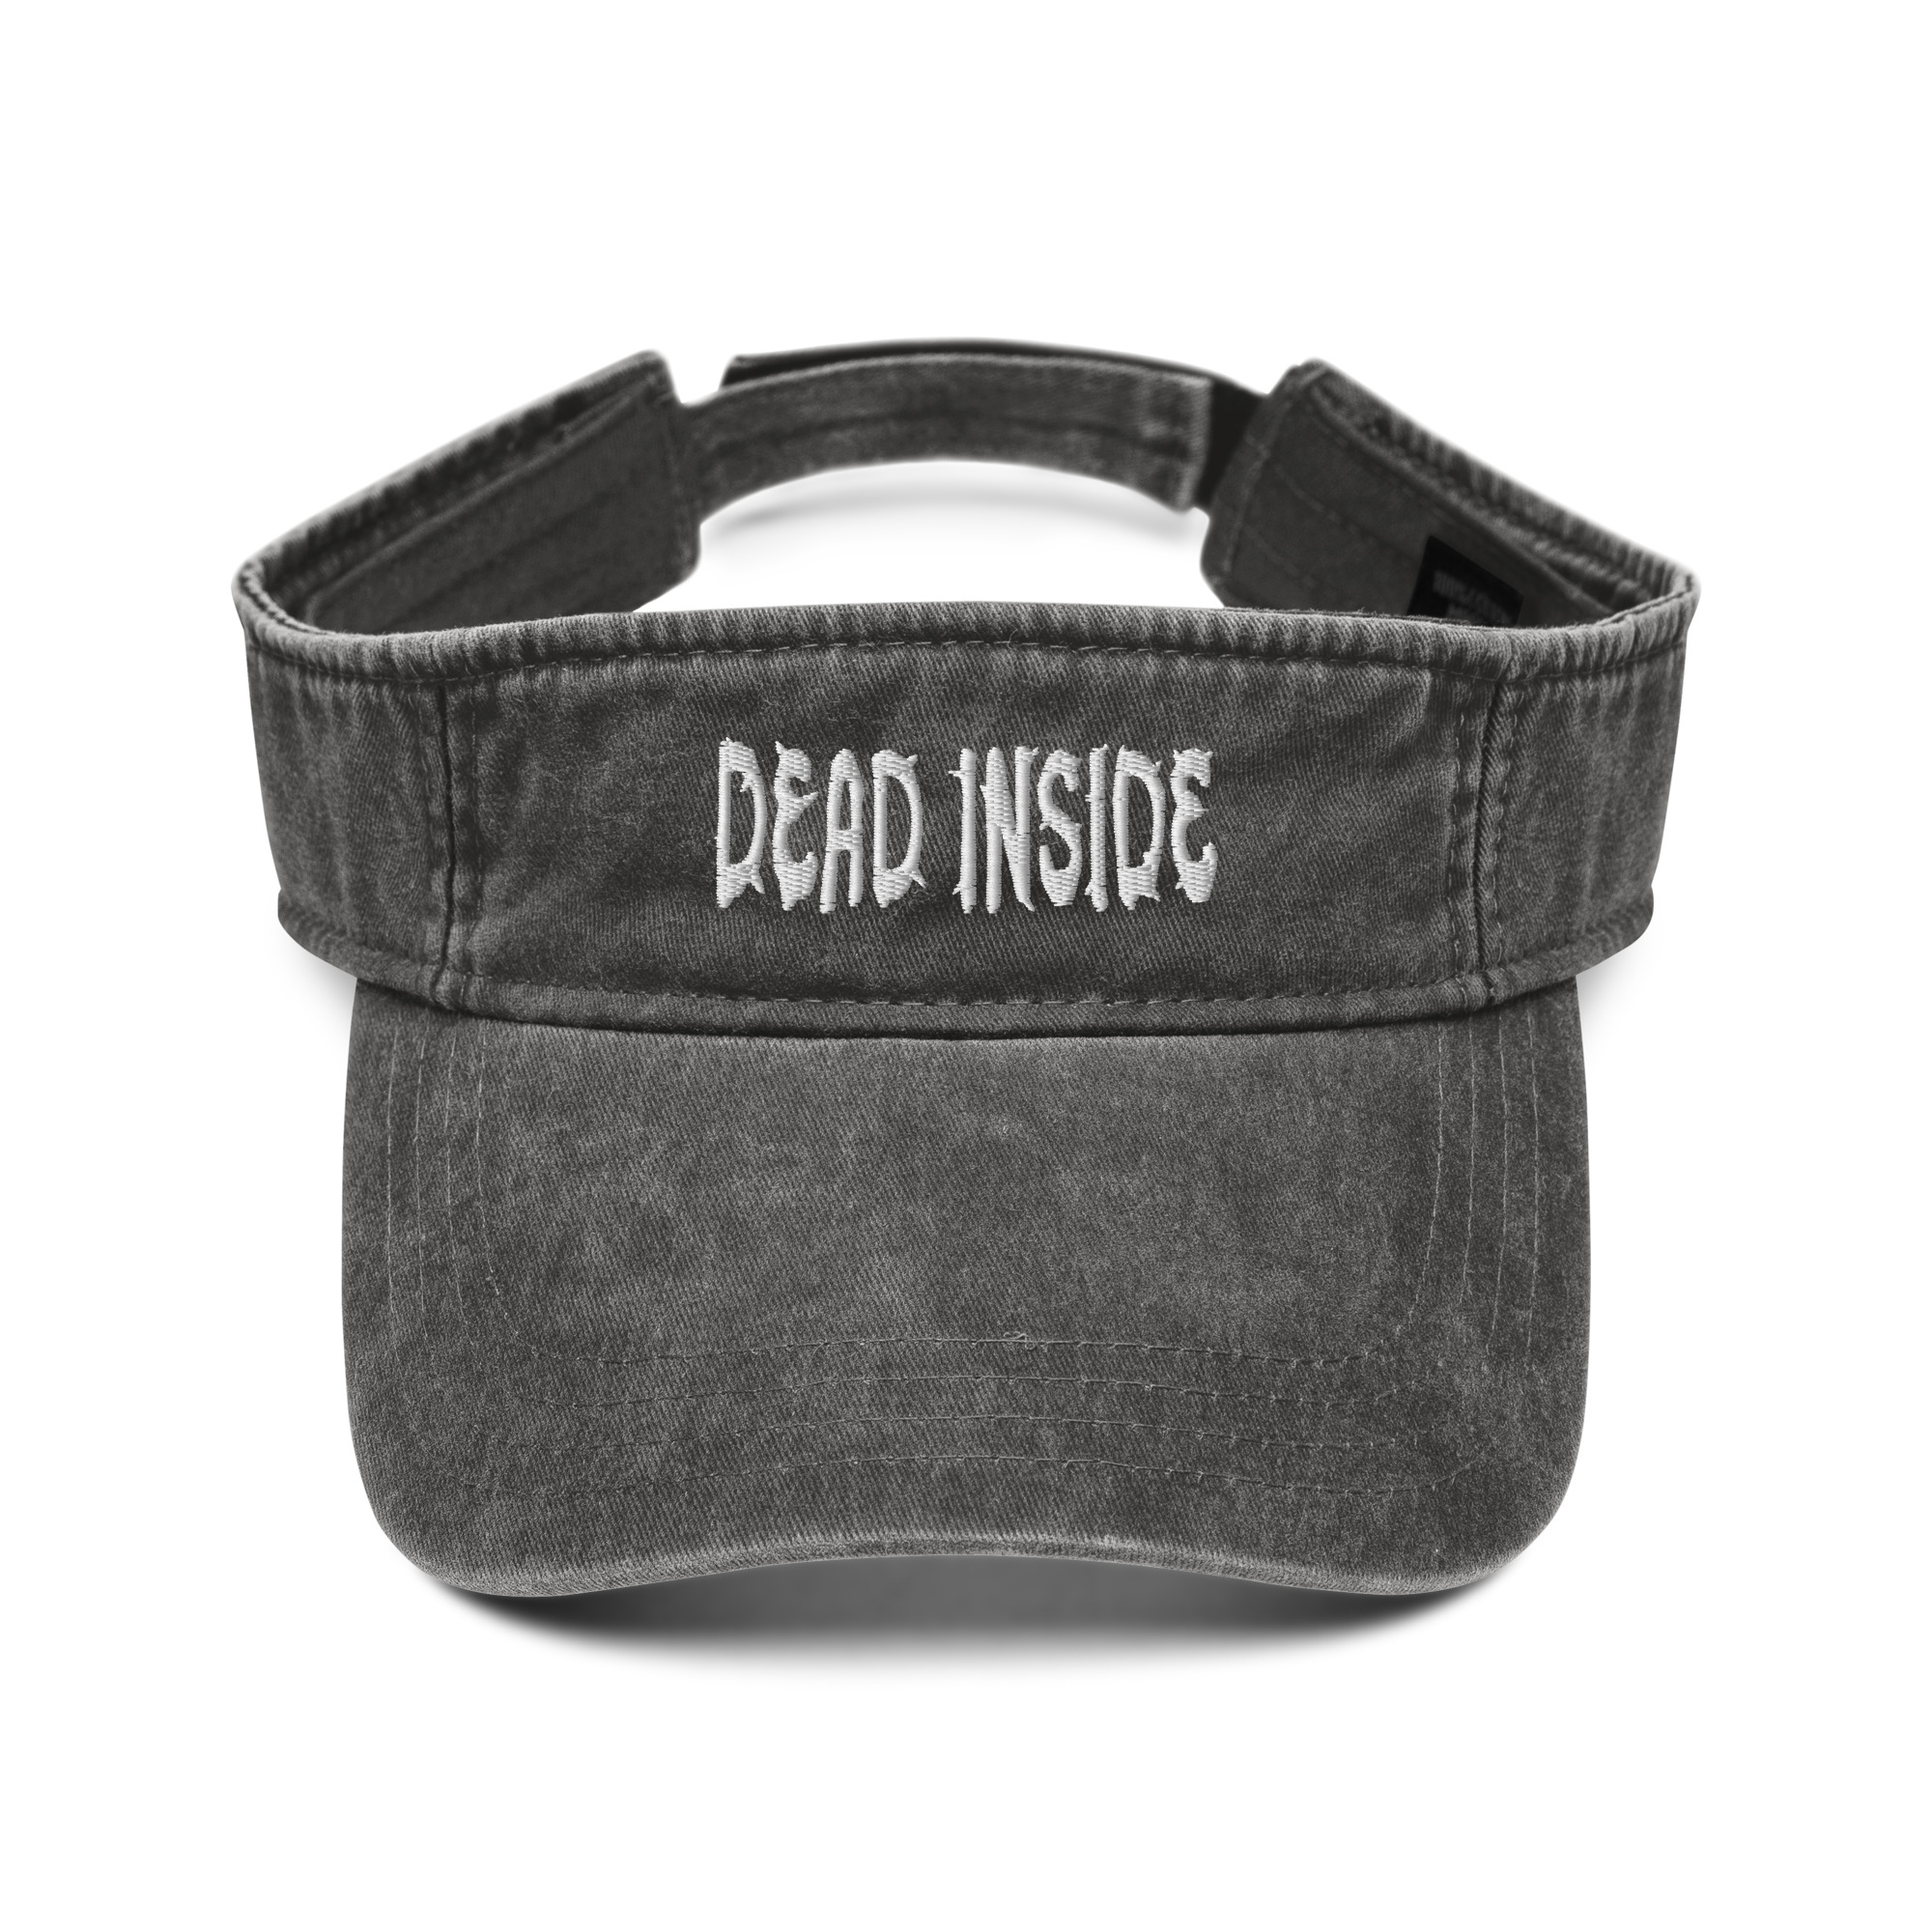 Featured image for “Dead Inside - Denim visor”